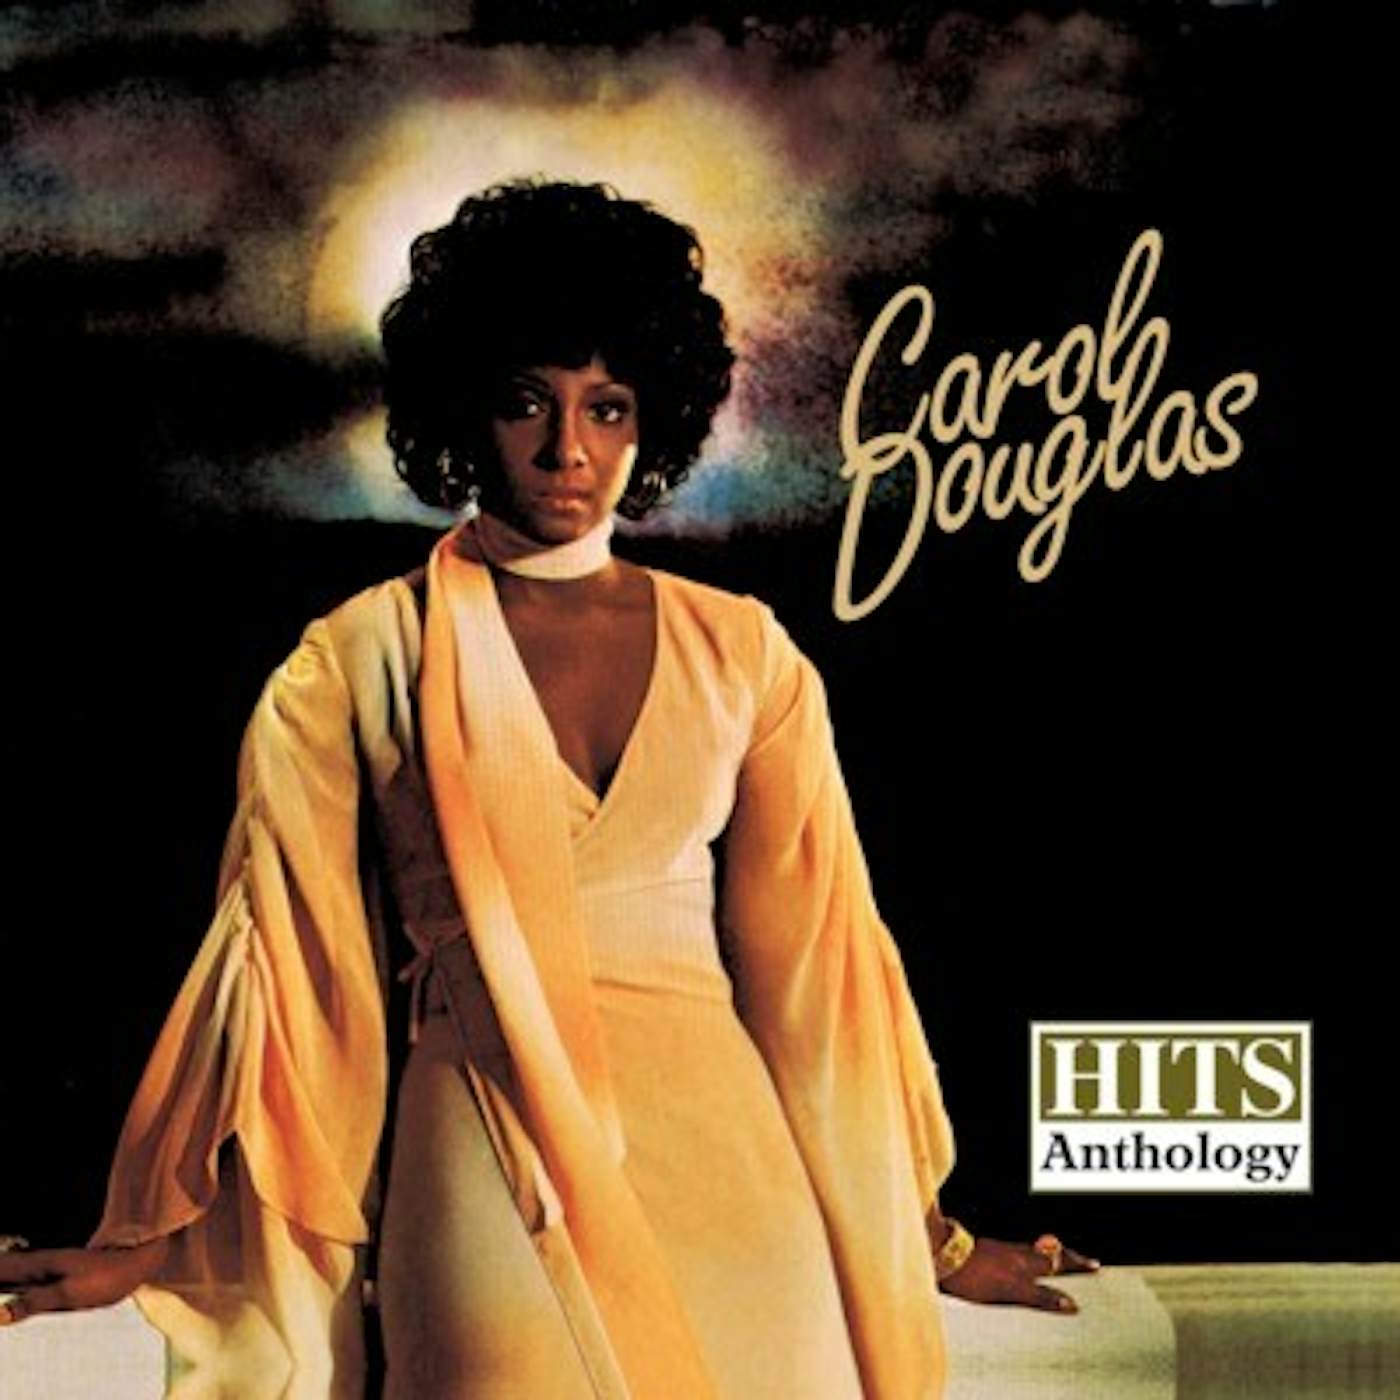 Carol Douglas HITS ANTHOLOGY CD